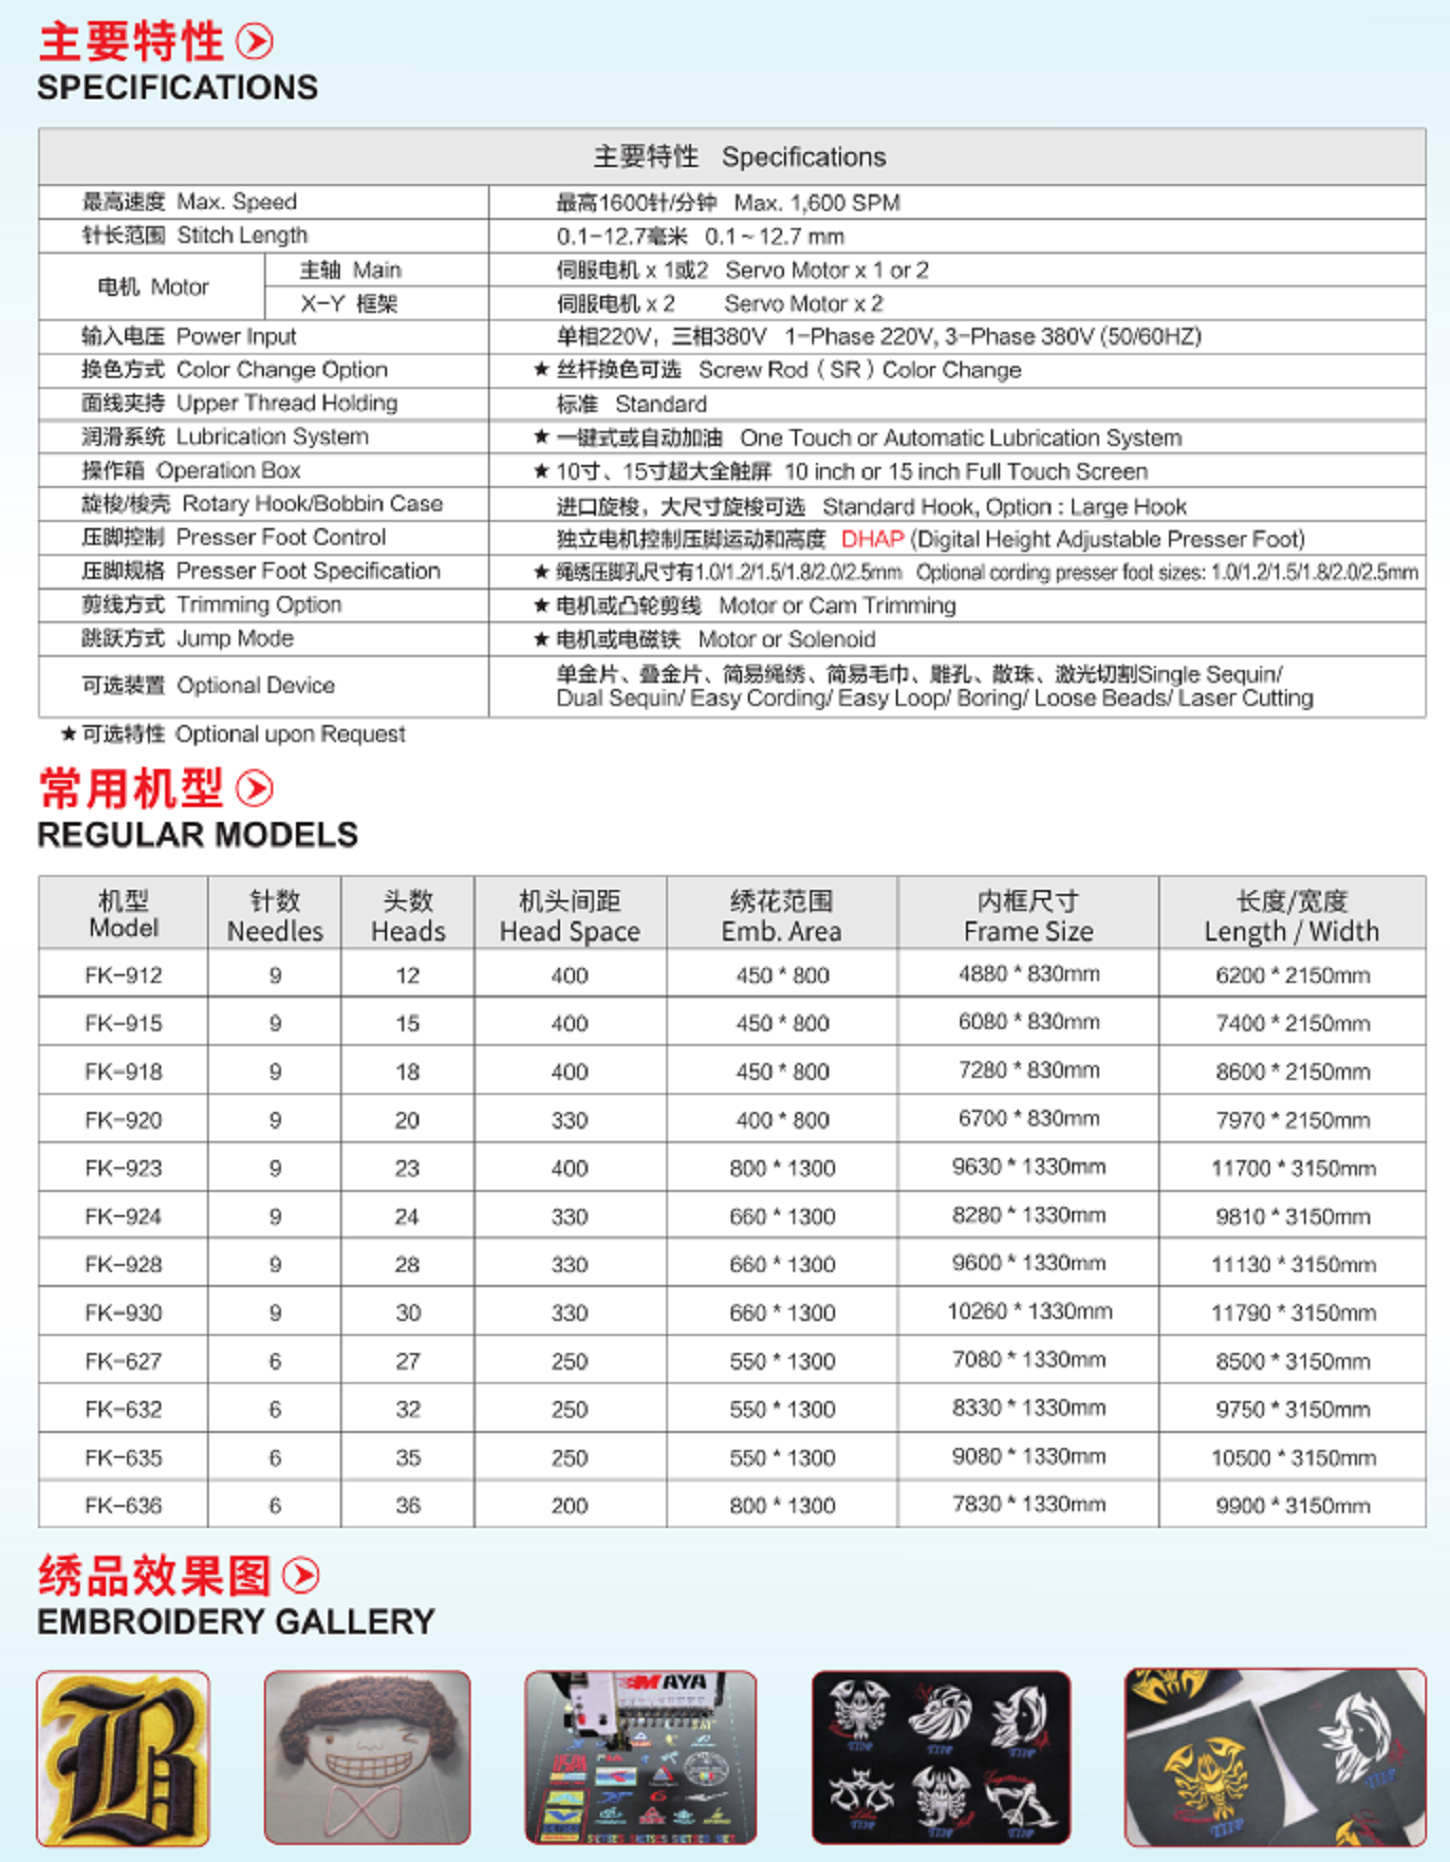 FK-923主要特性和机型-中文产品说明PDF67截图1450x.png